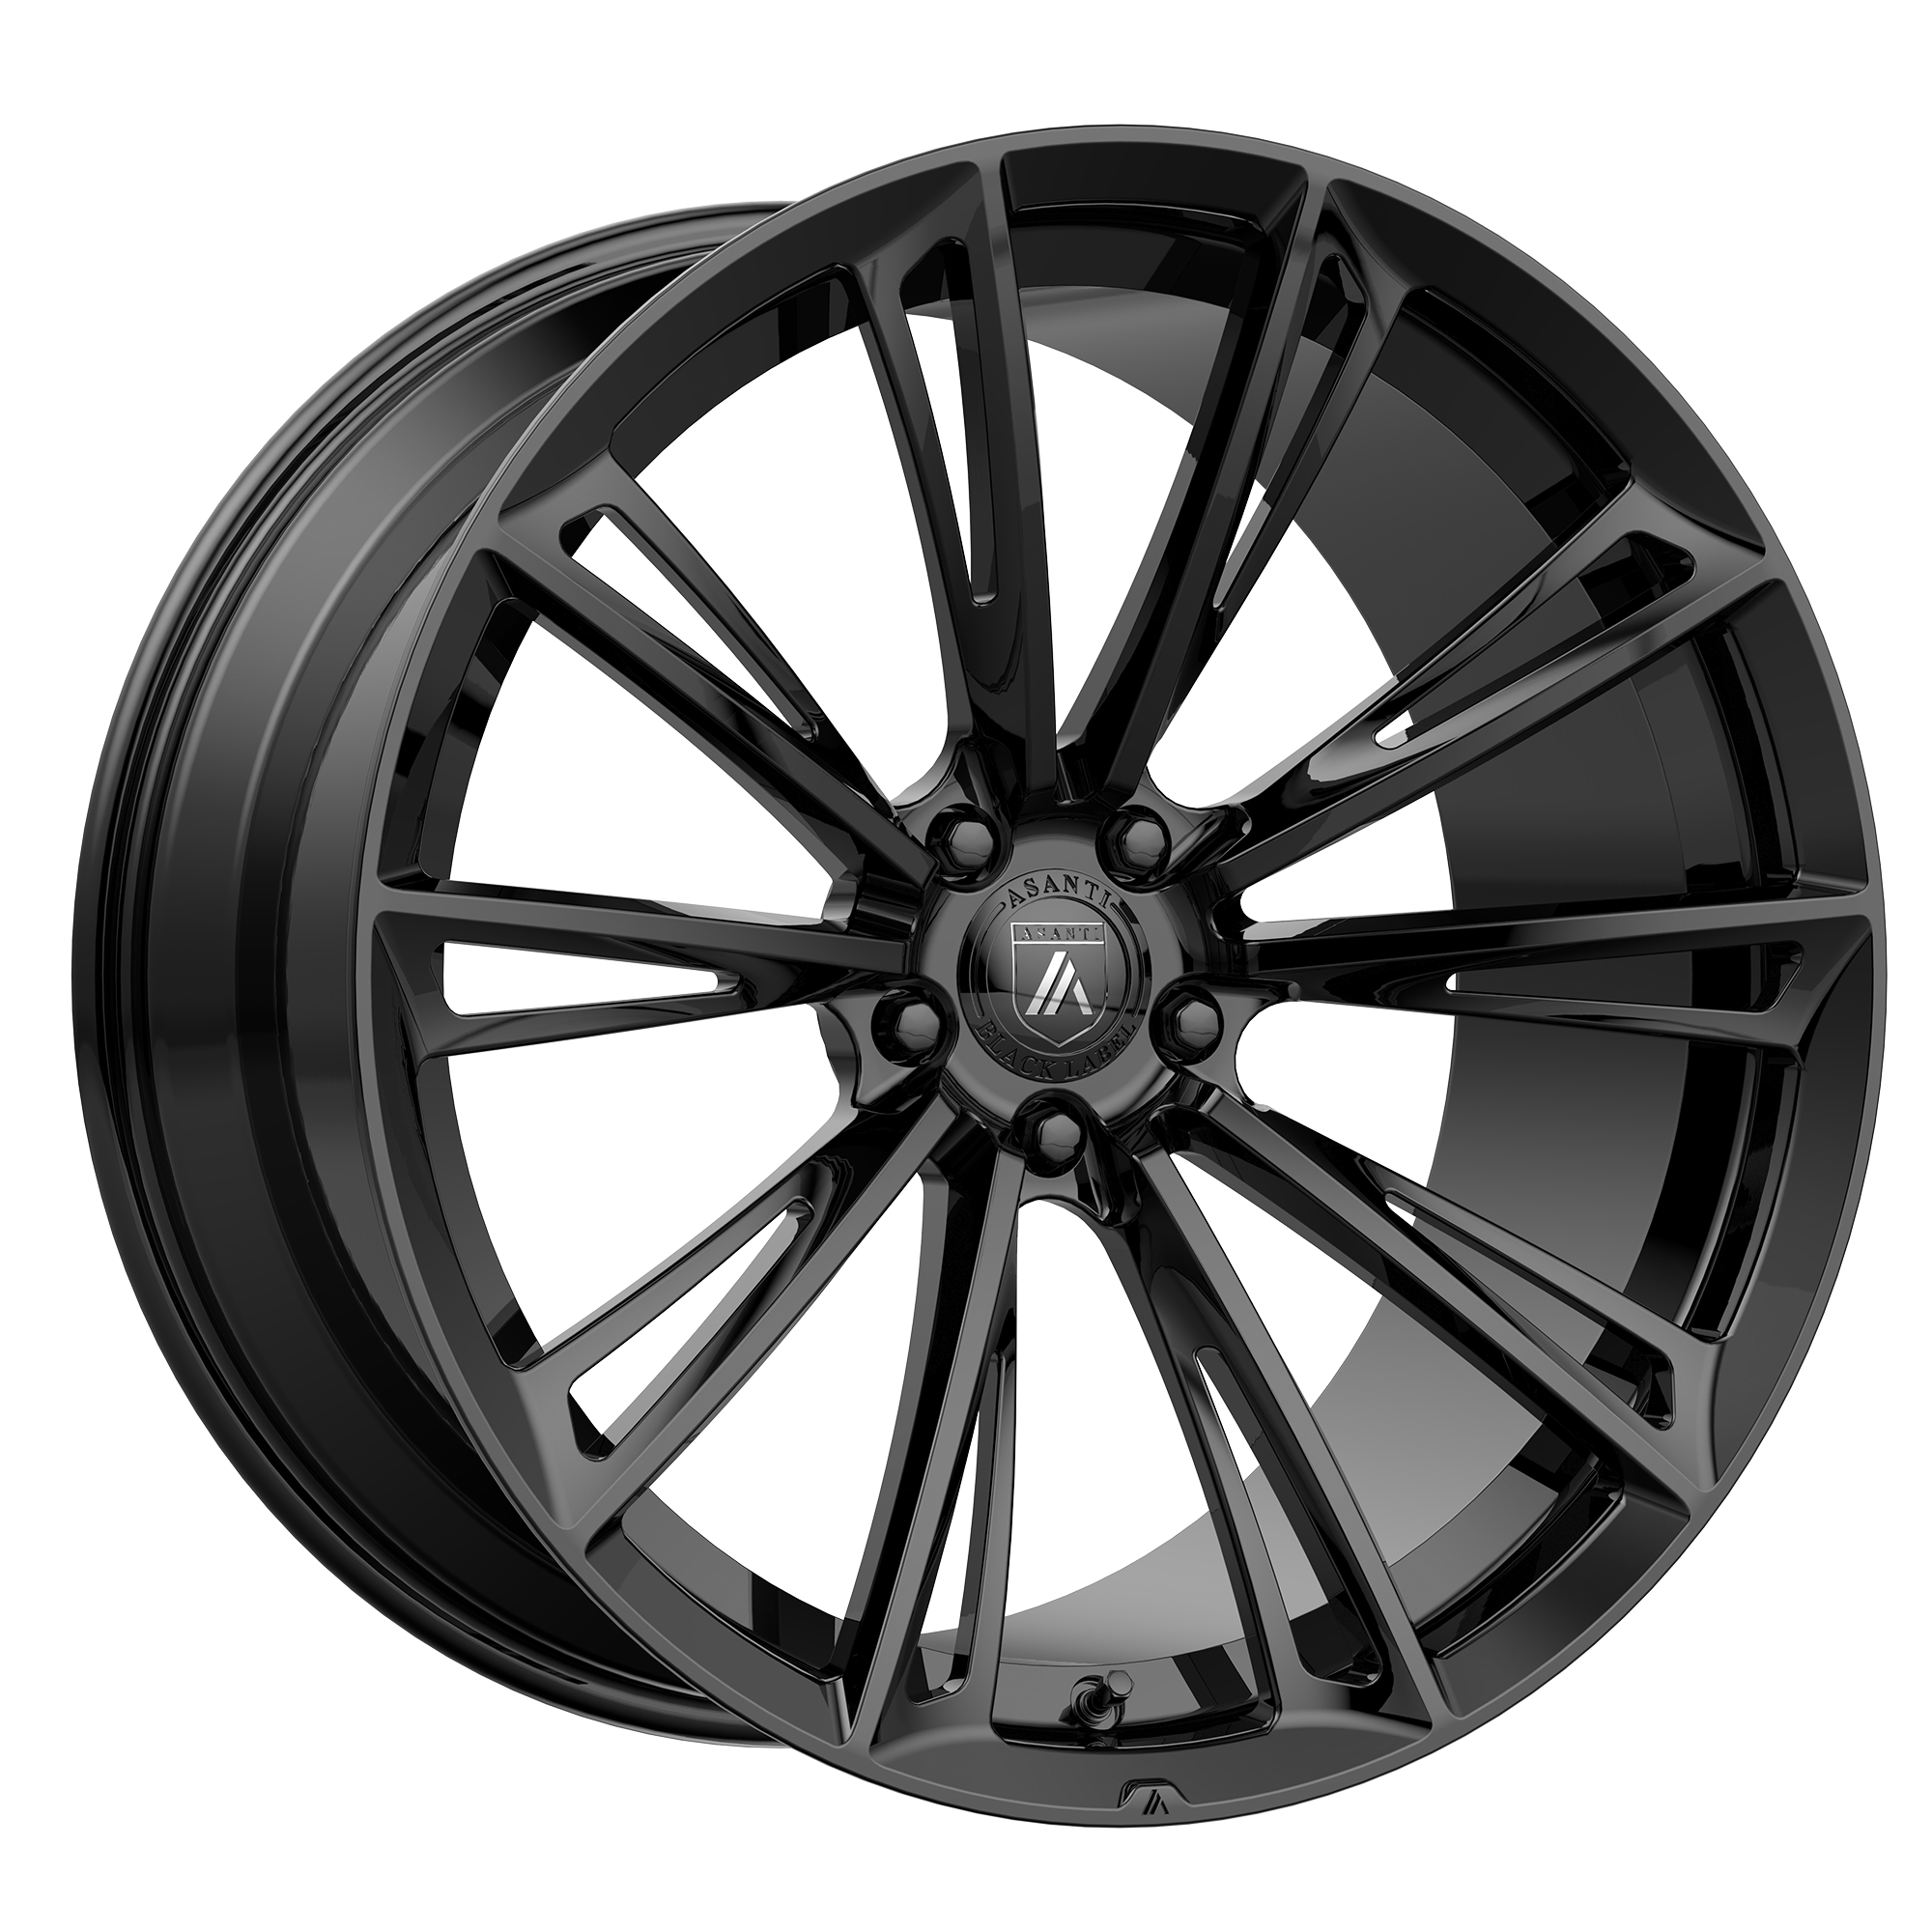 CORONA 22x9 5x120.00 GLOSS BLACK (32 mm) - Tires and Engine Performance